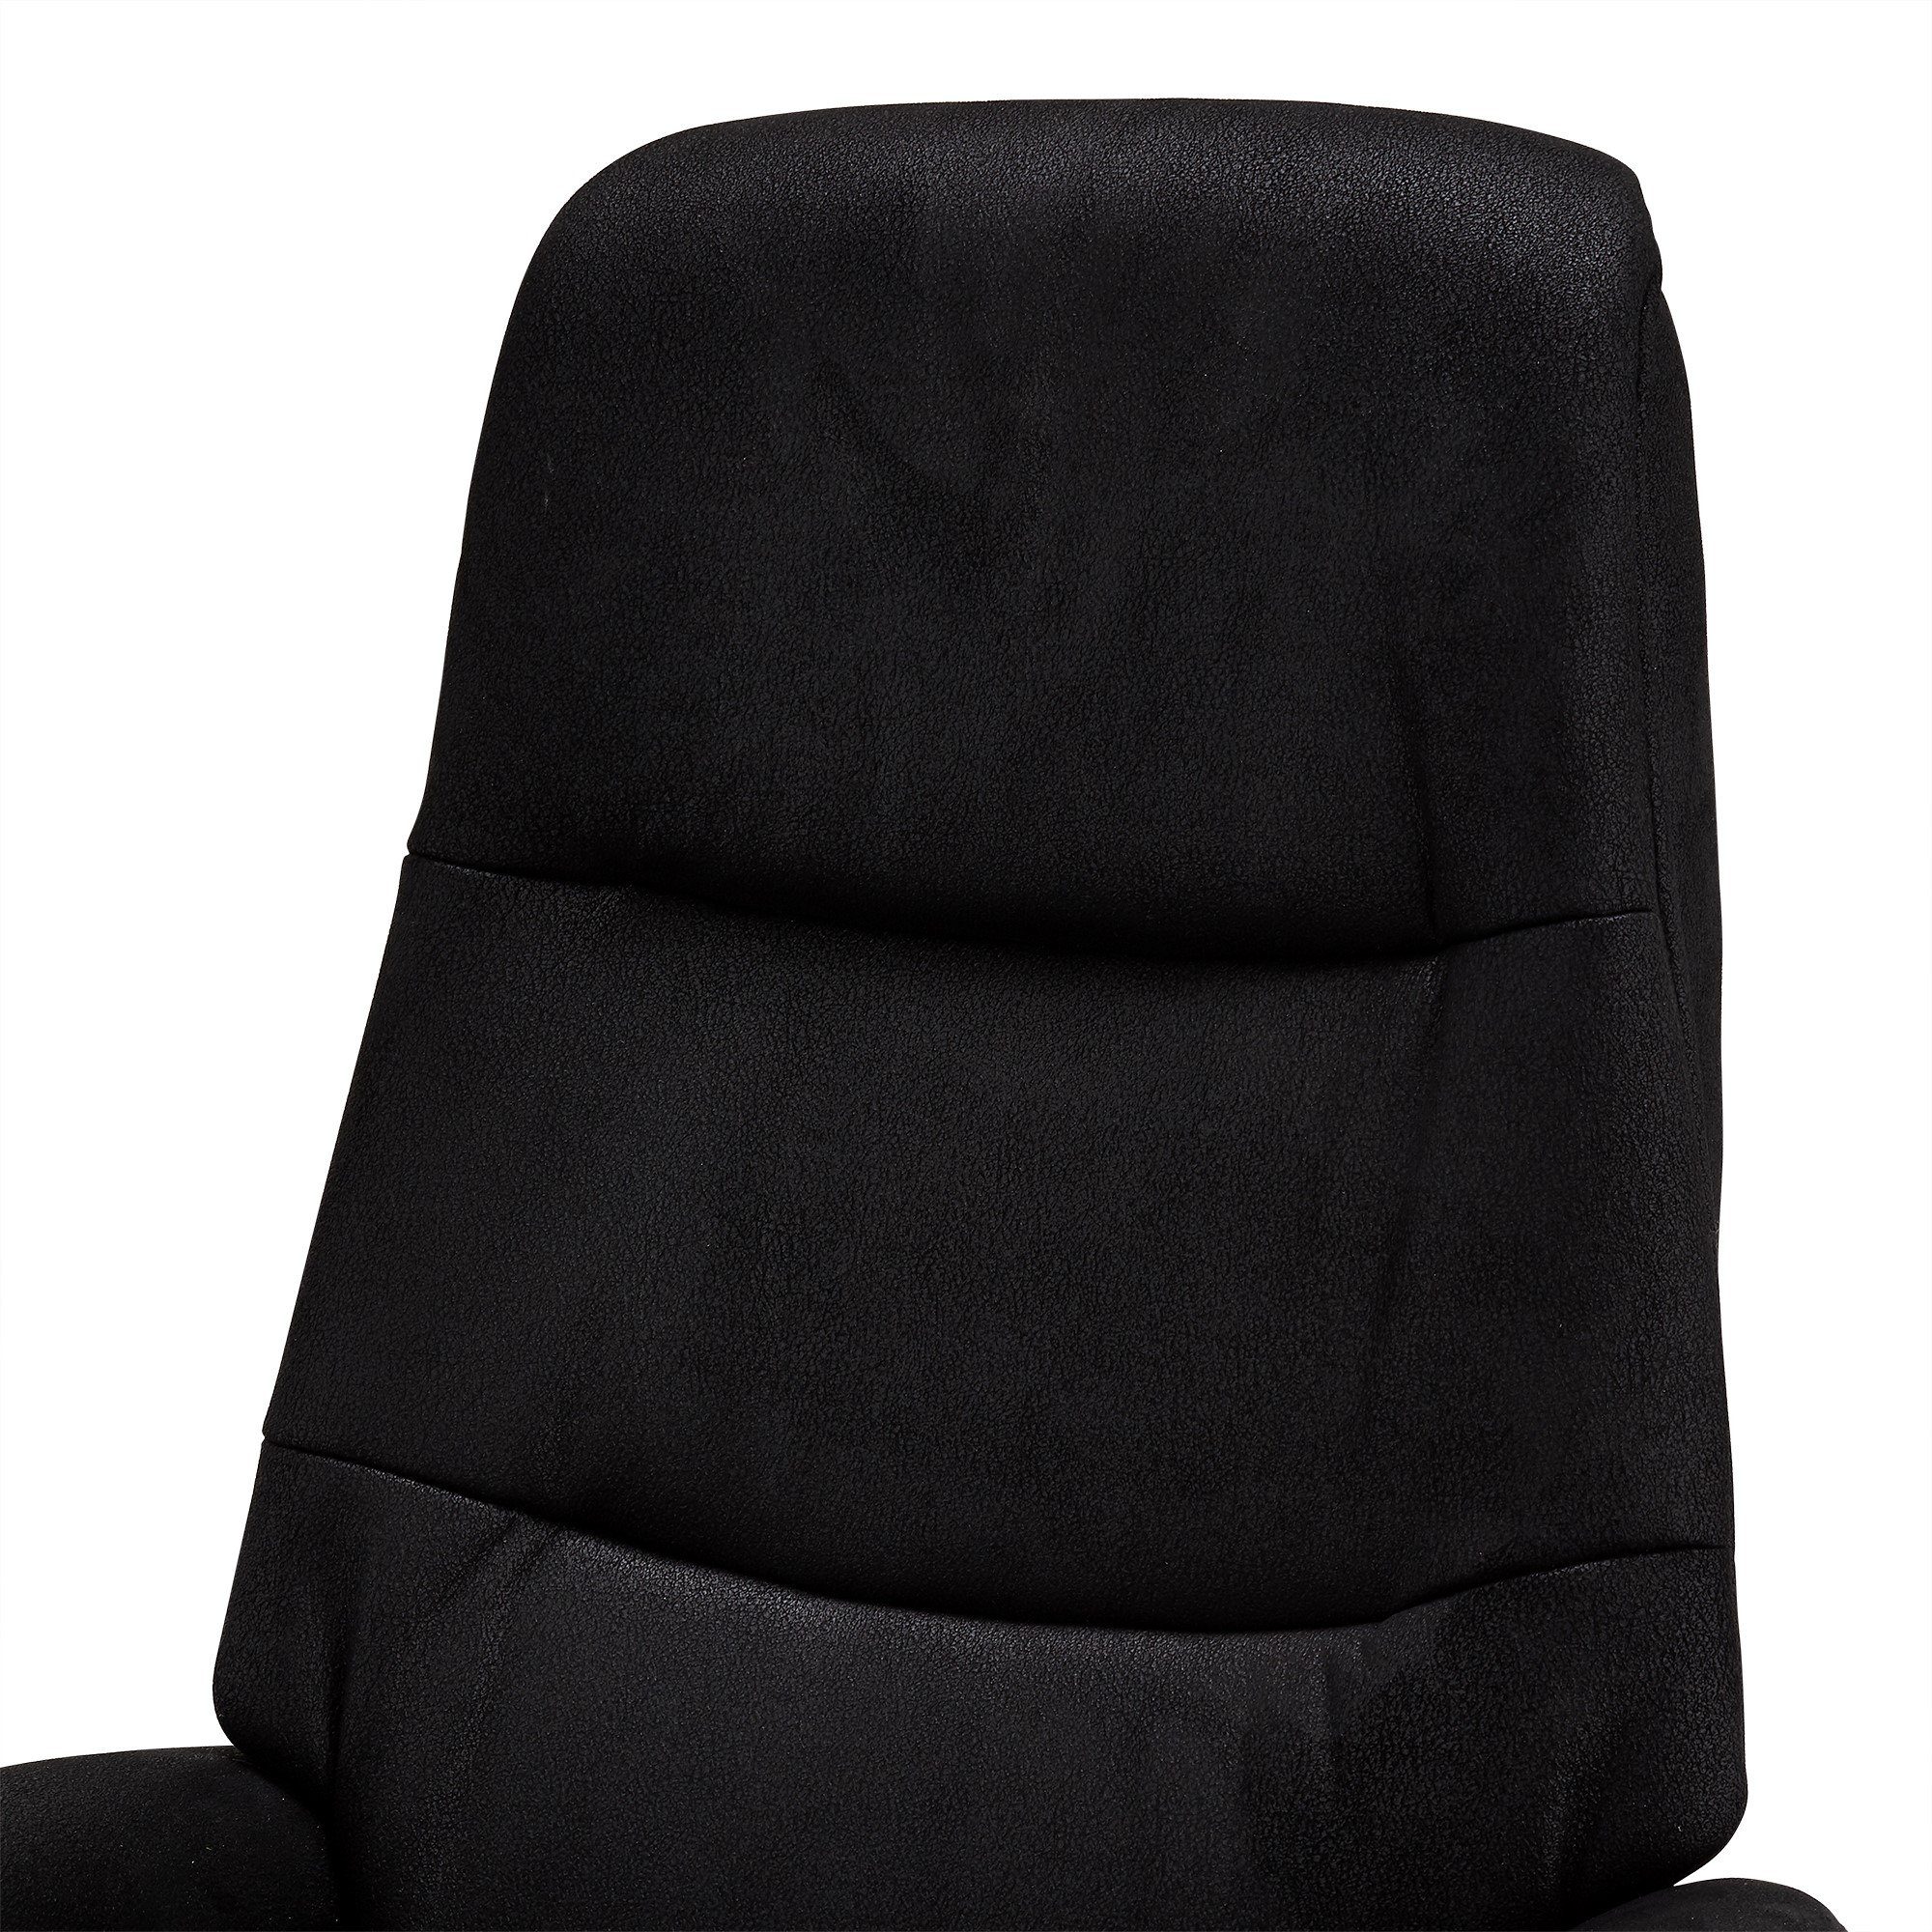 (1-St) Relaxsessel Sessel, Metall silberfarben Recliner ebuy24 schwarz, Dode